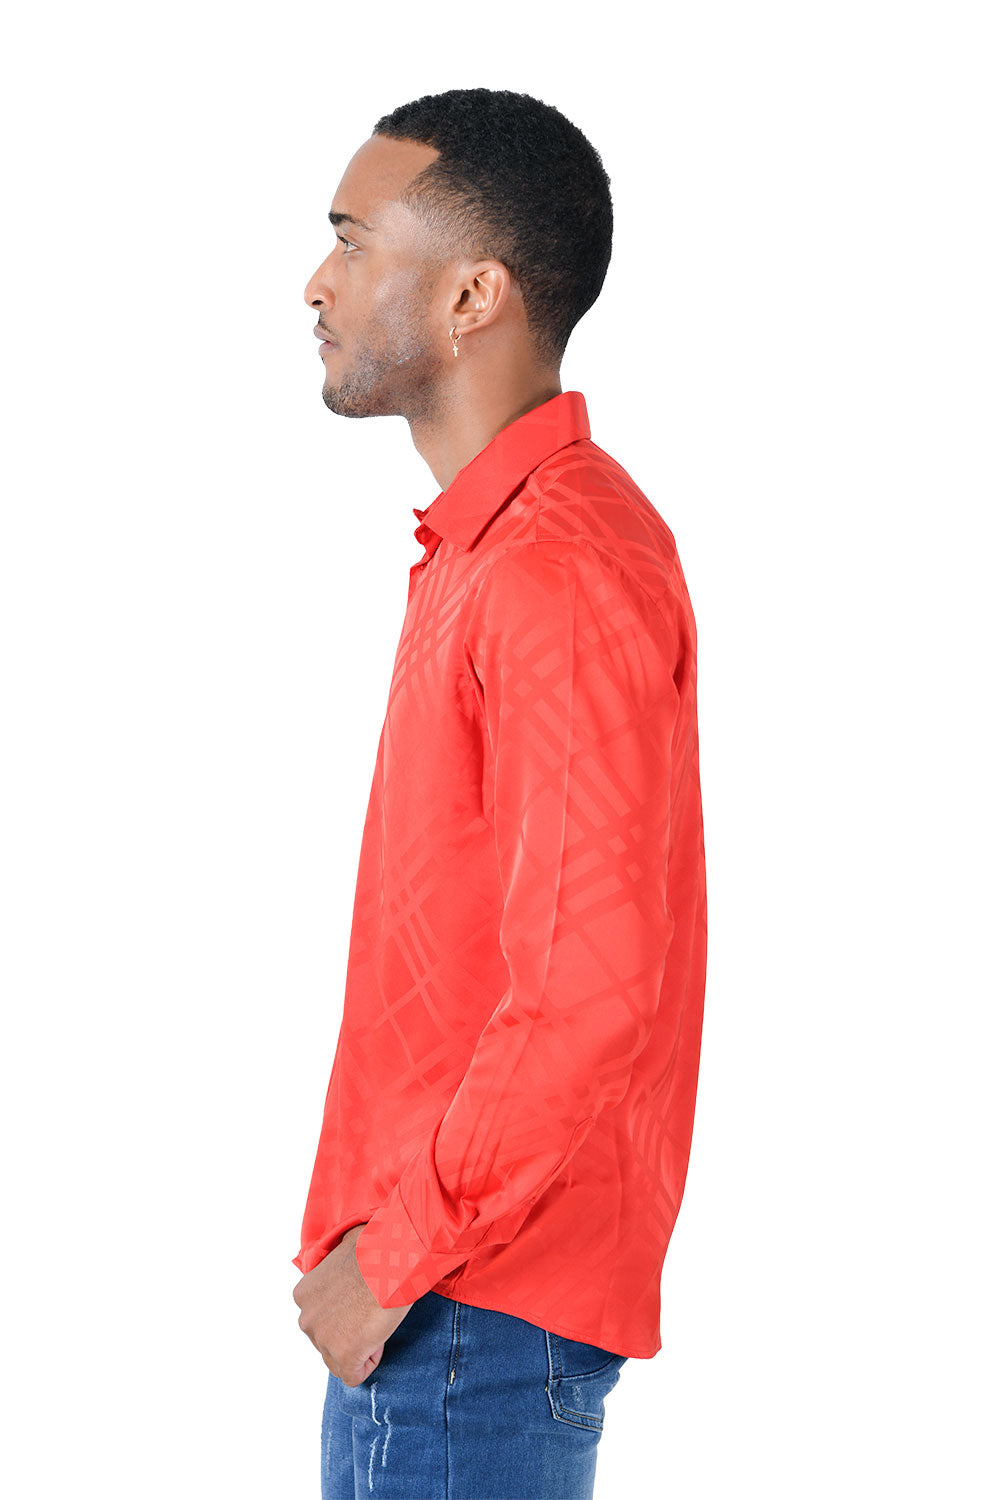 Barabas Men's Textured Diamond Geometric button down dress shirts B319 Red